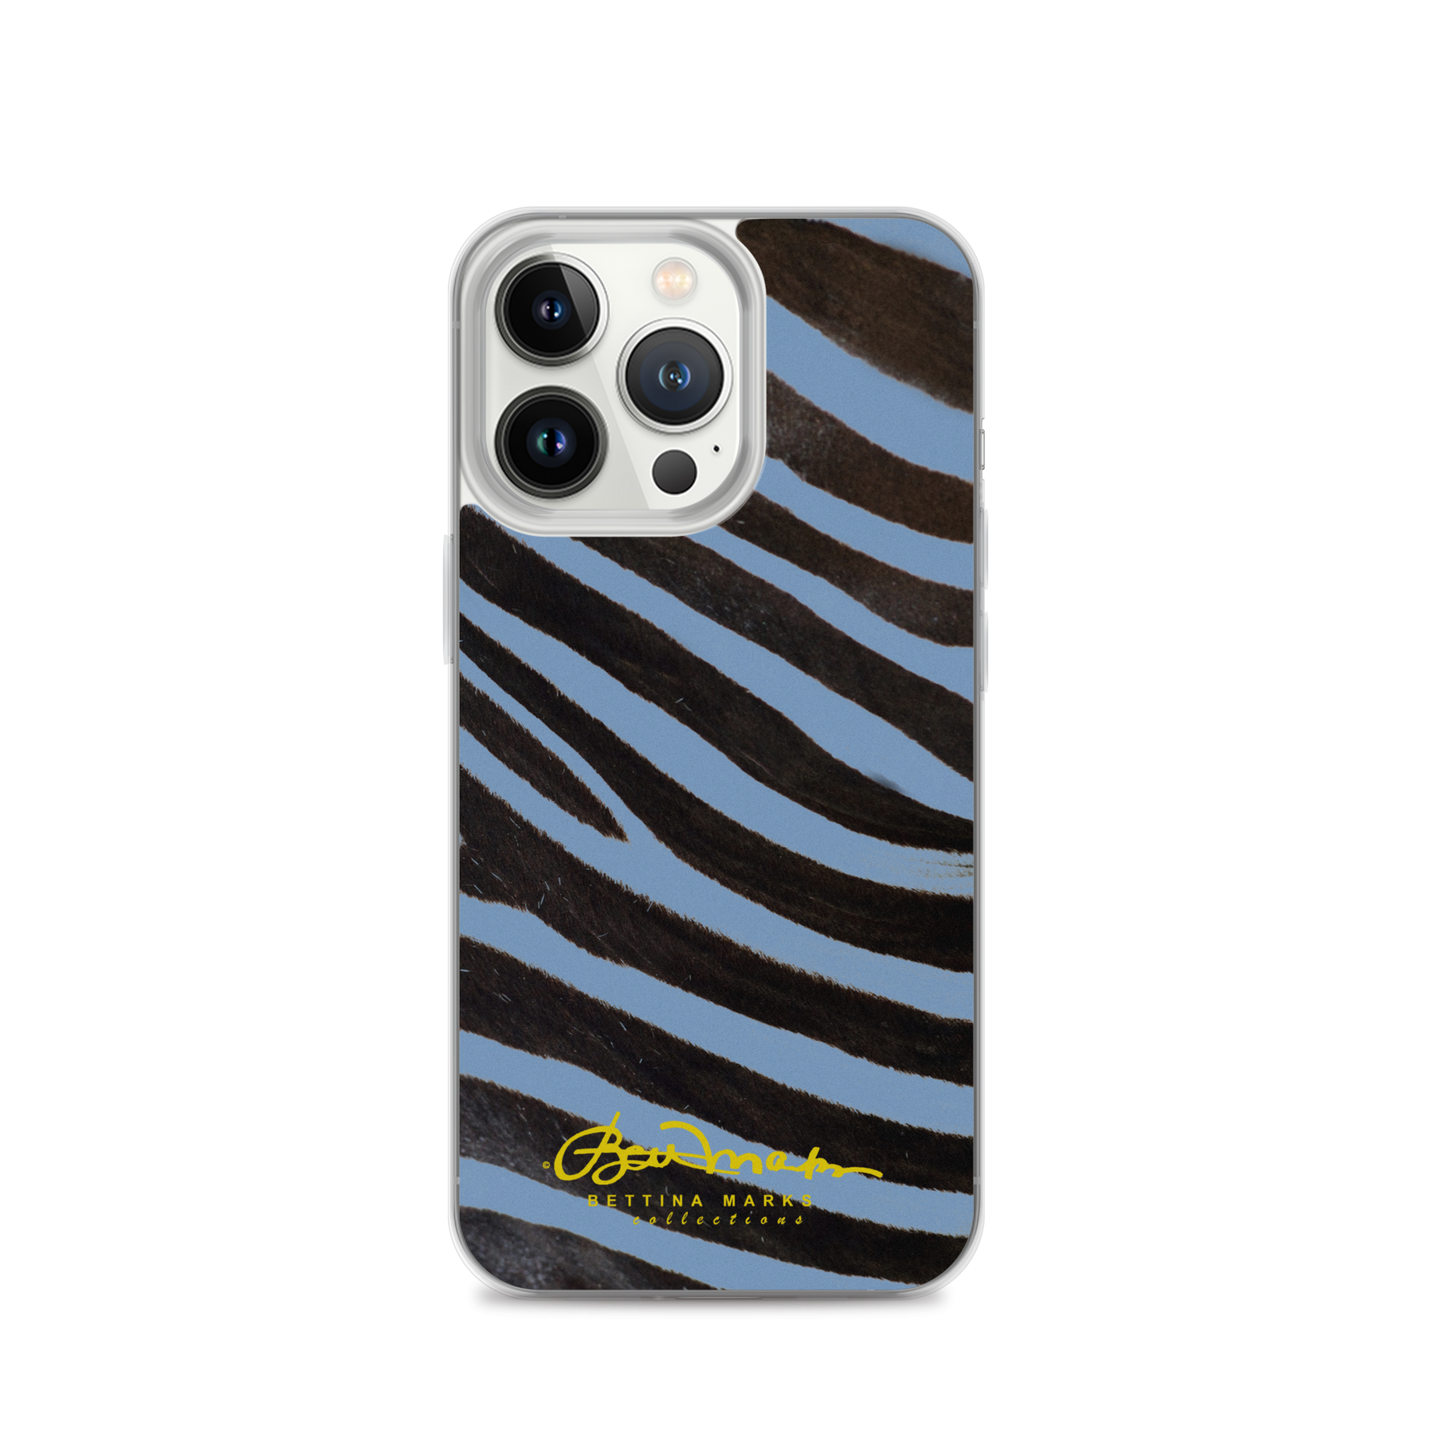 Blue Zebra iPhone Case (select model)